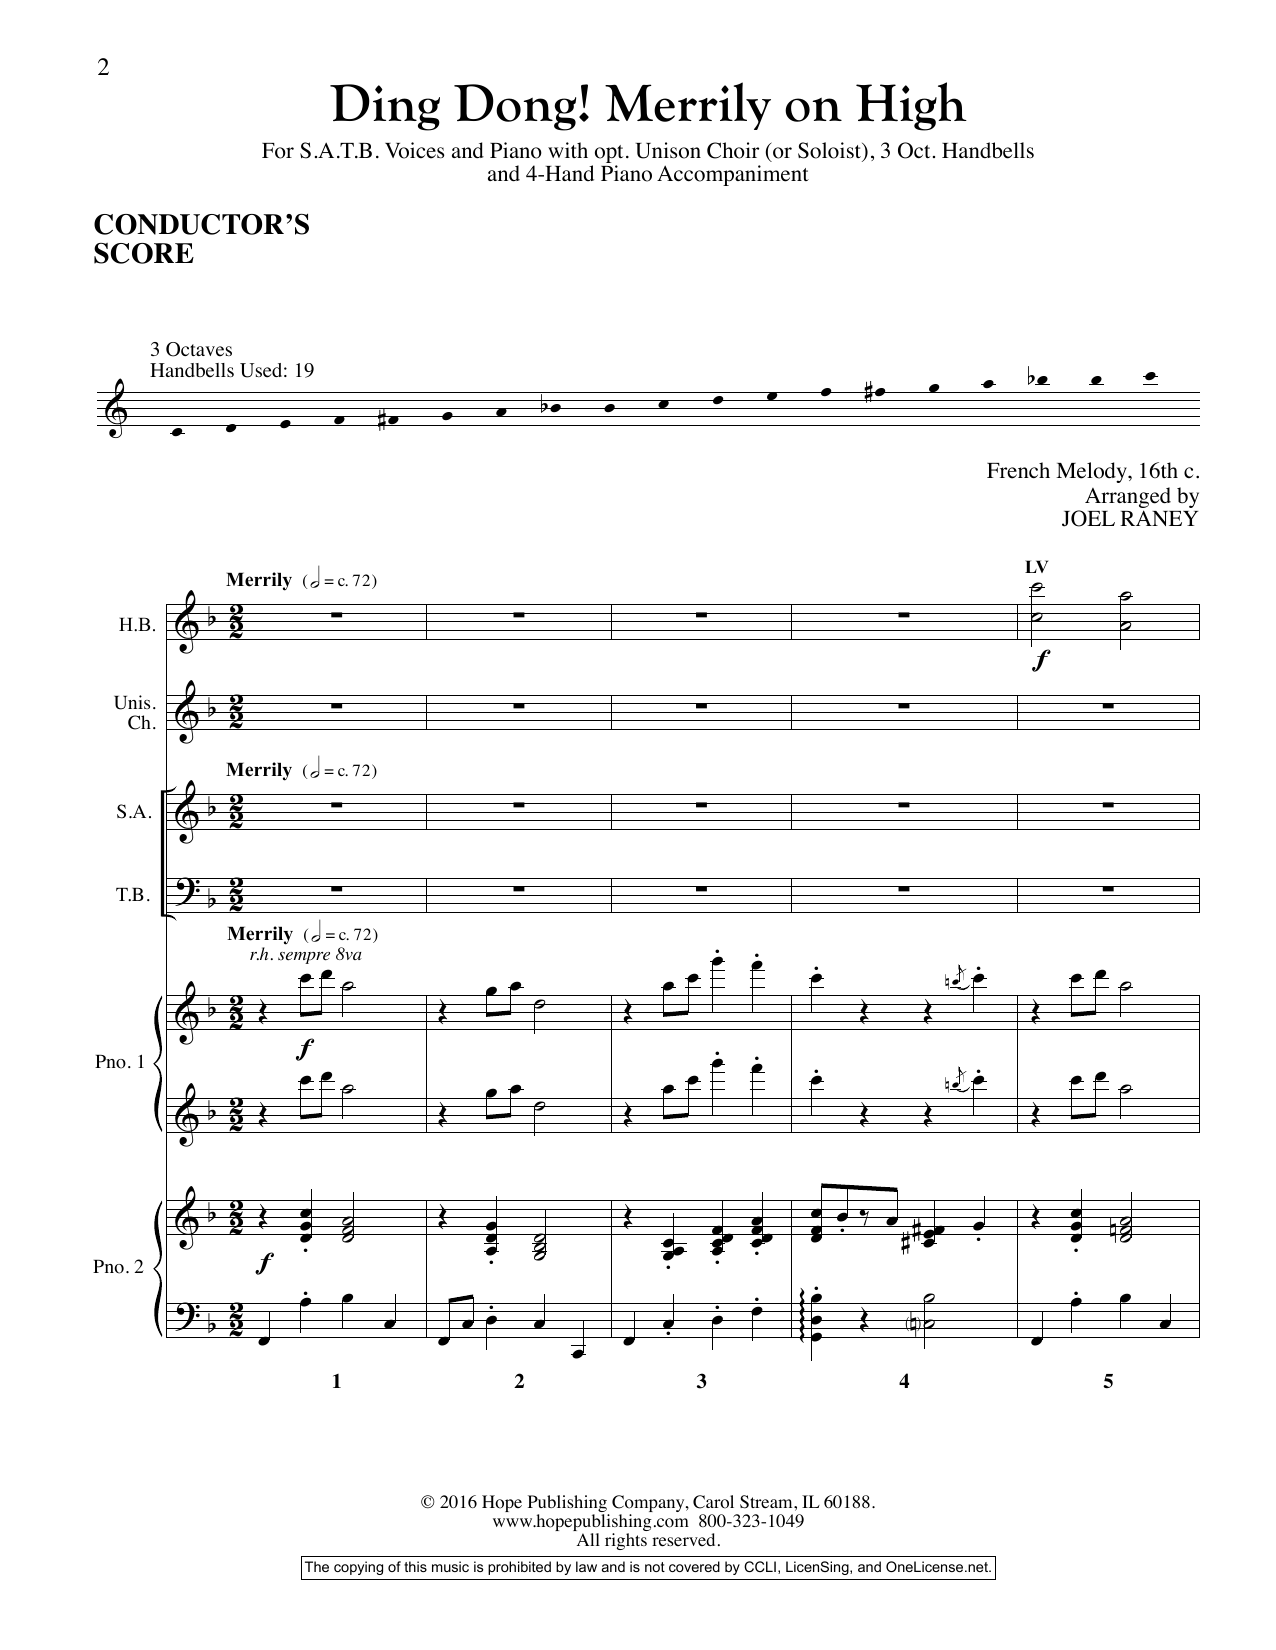 Joel Raney Ding Dong! Merrily On High - Full Score Sheet Music Notes & Chords for Choir Instrumental Pak - Download or Print PDF